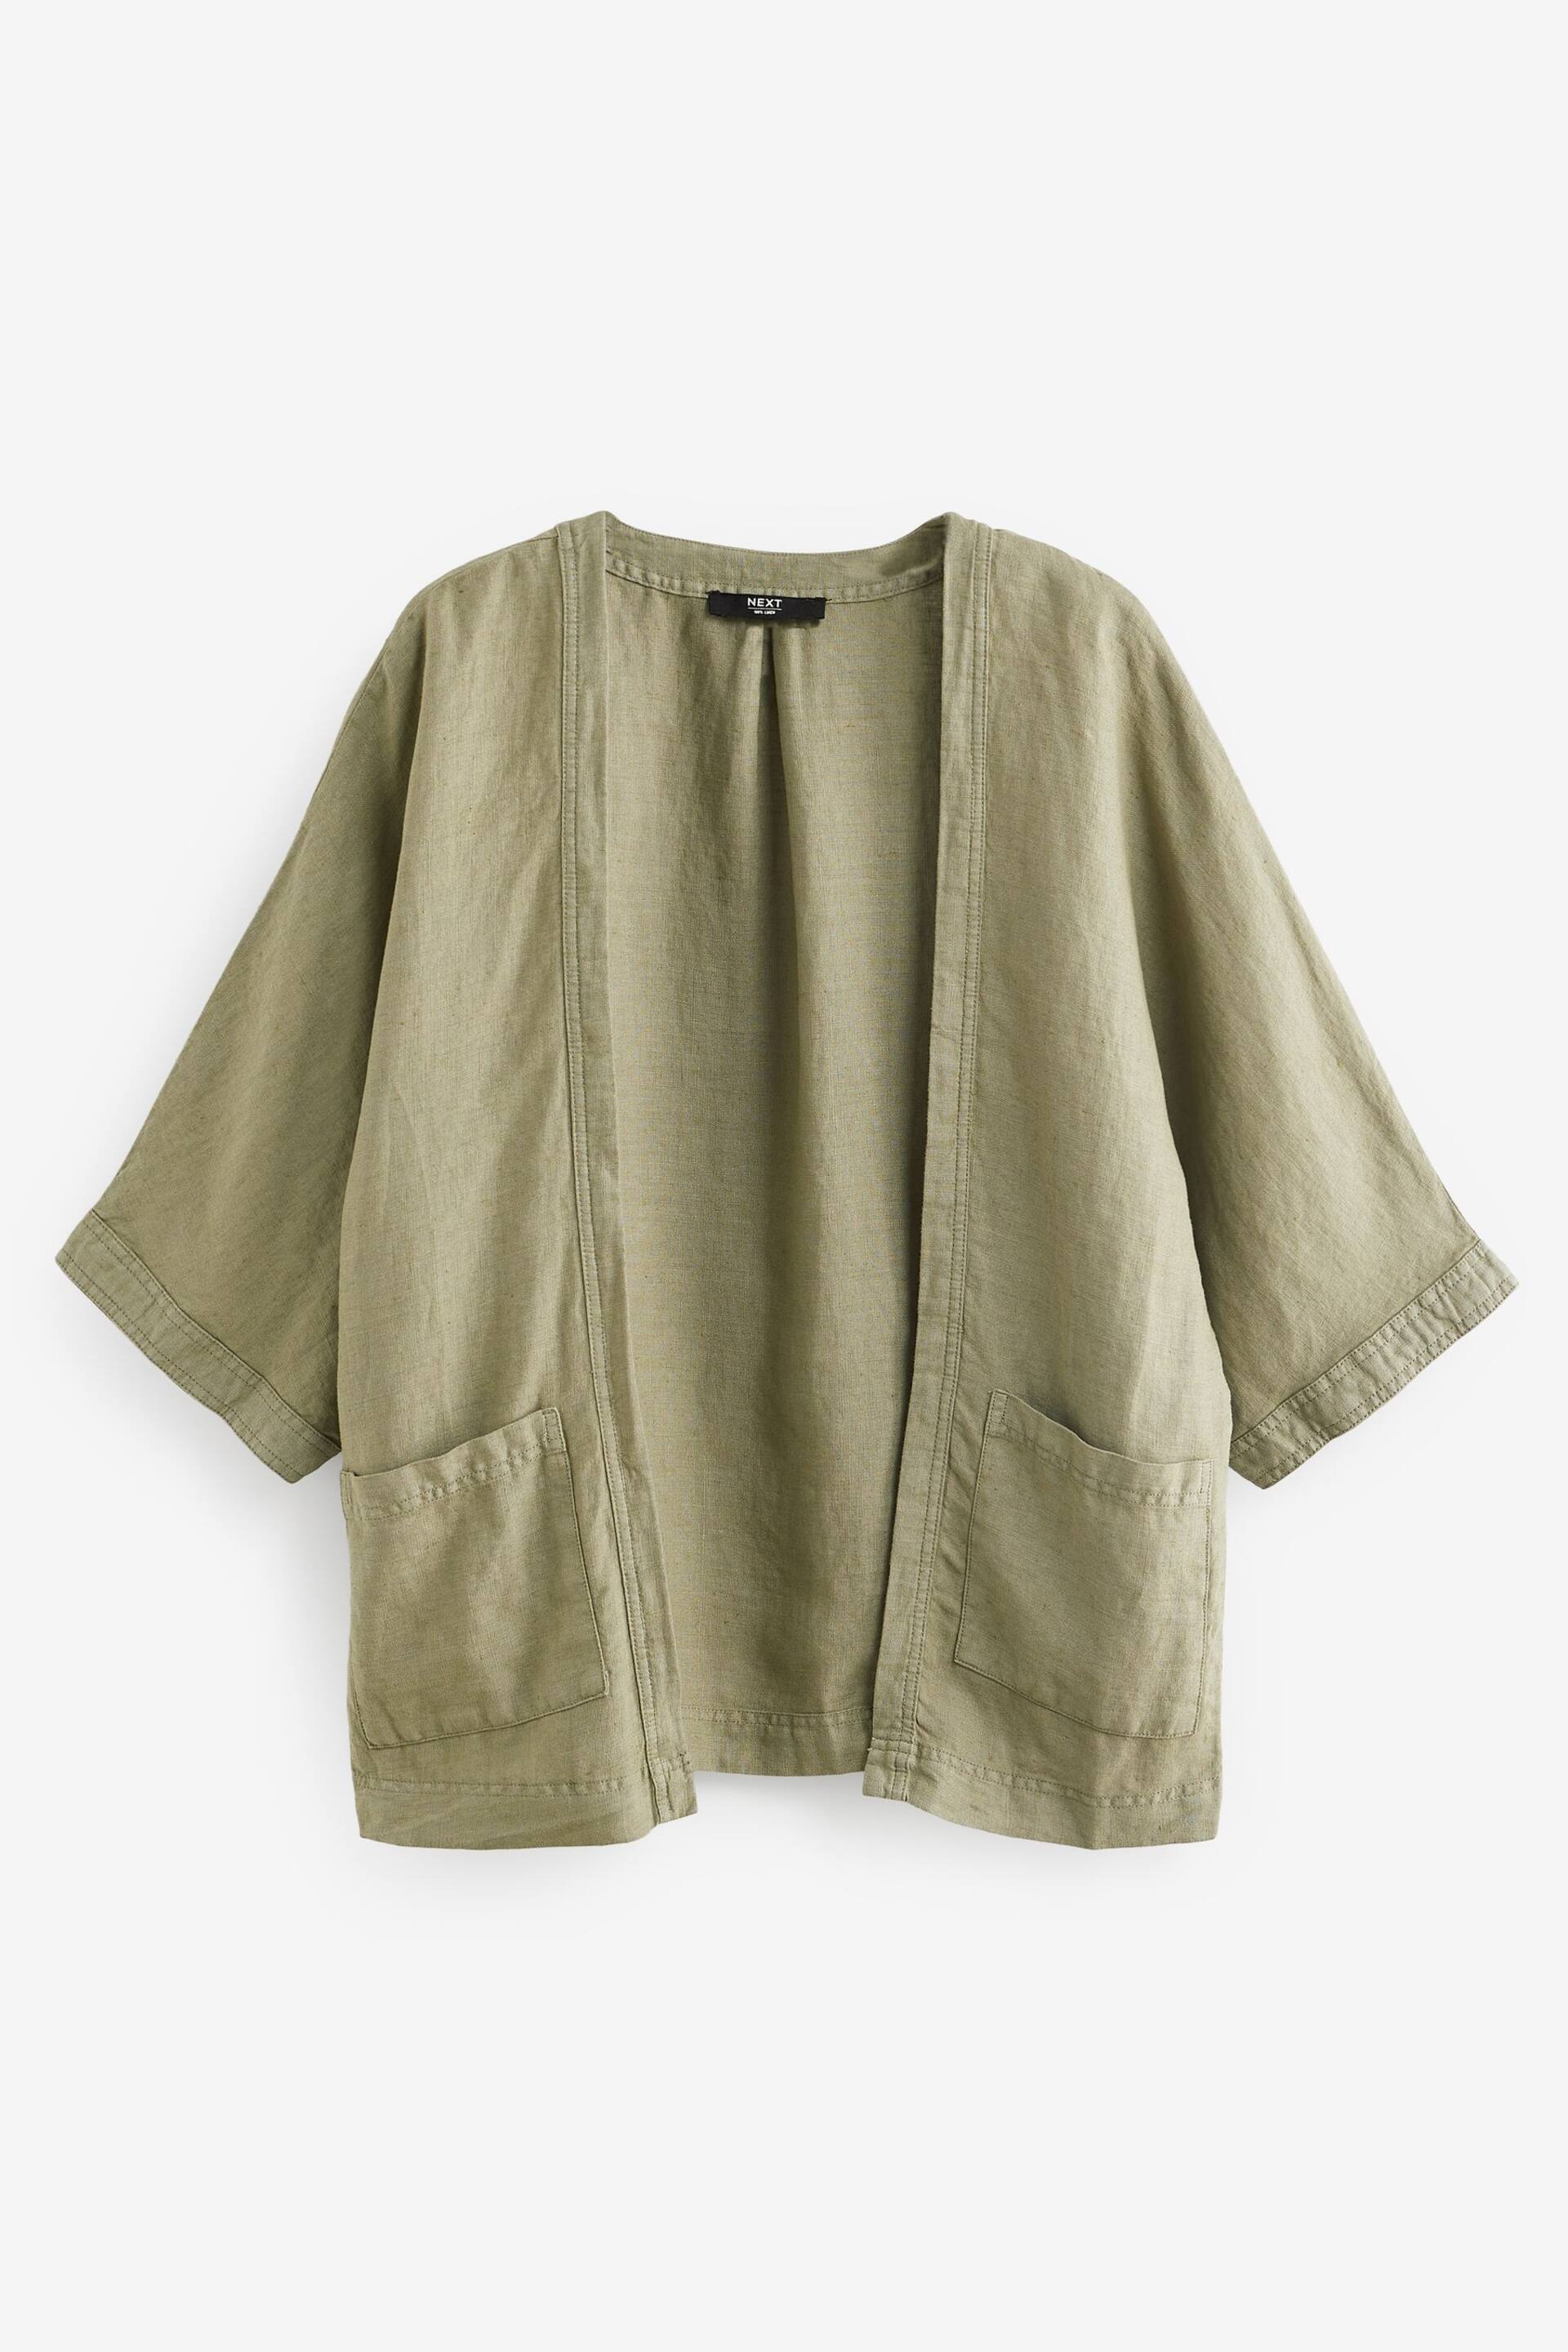 Khaki Green 100% Linen Jacket - Image 8 of 8